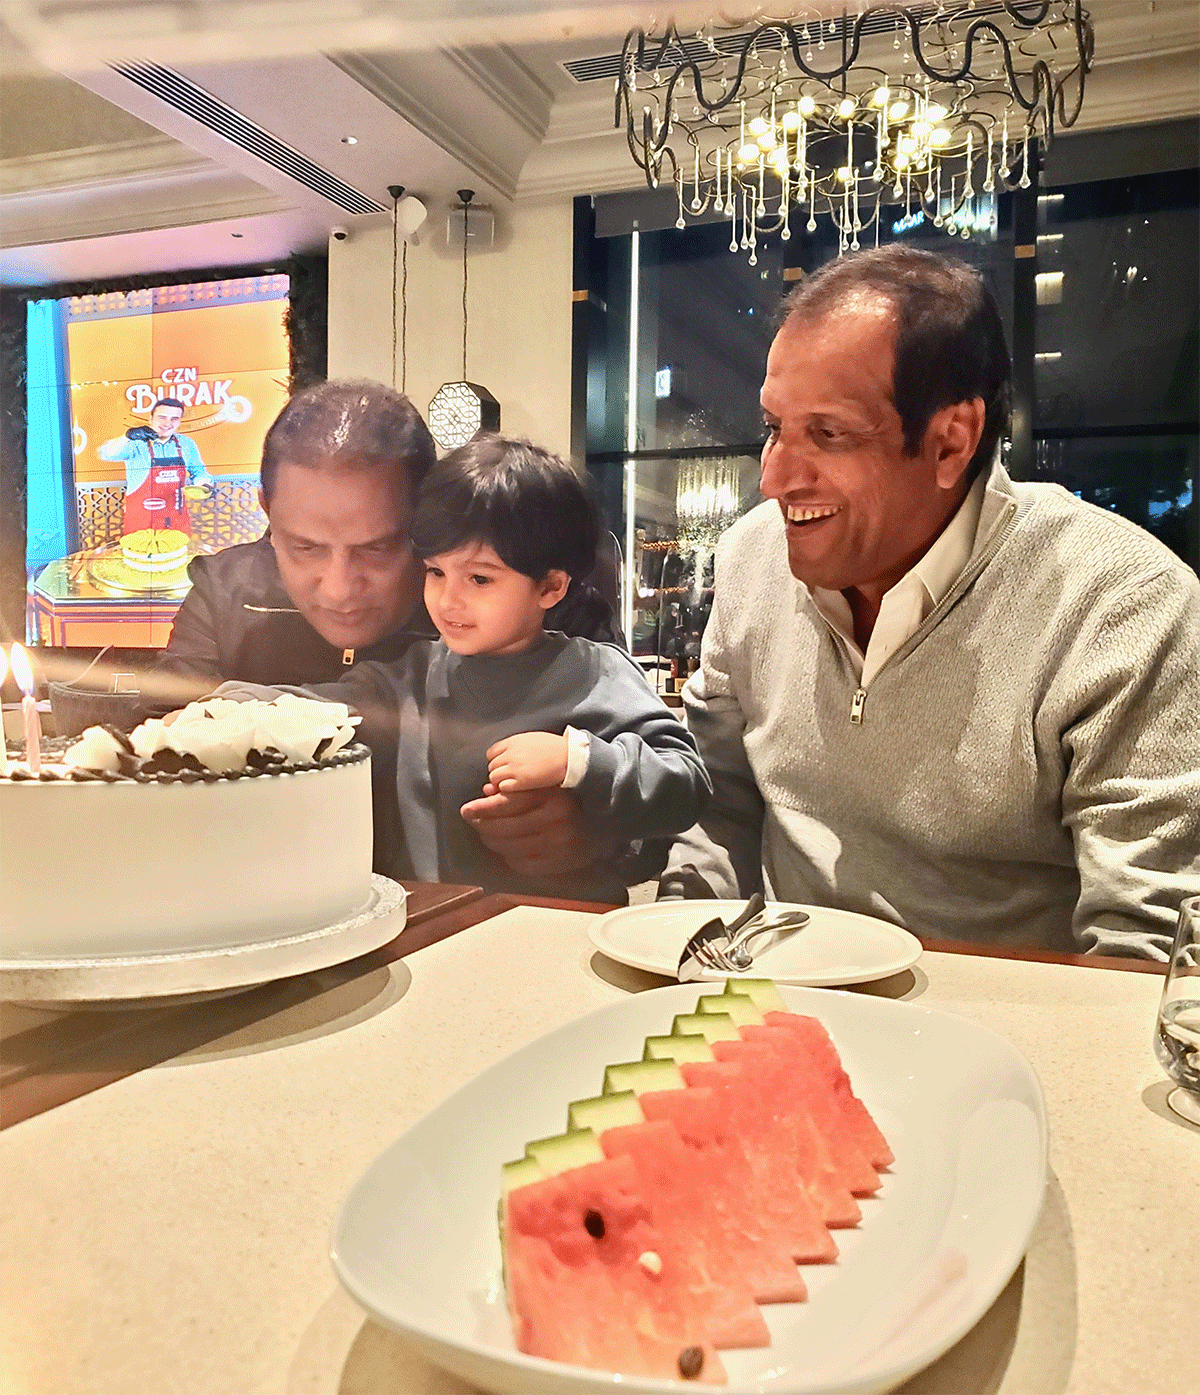 Sania Mirza's son Izhaan Mirza Malik helps Mohammed Azharuddin cut his birthday cake as Imran Mirza looks on